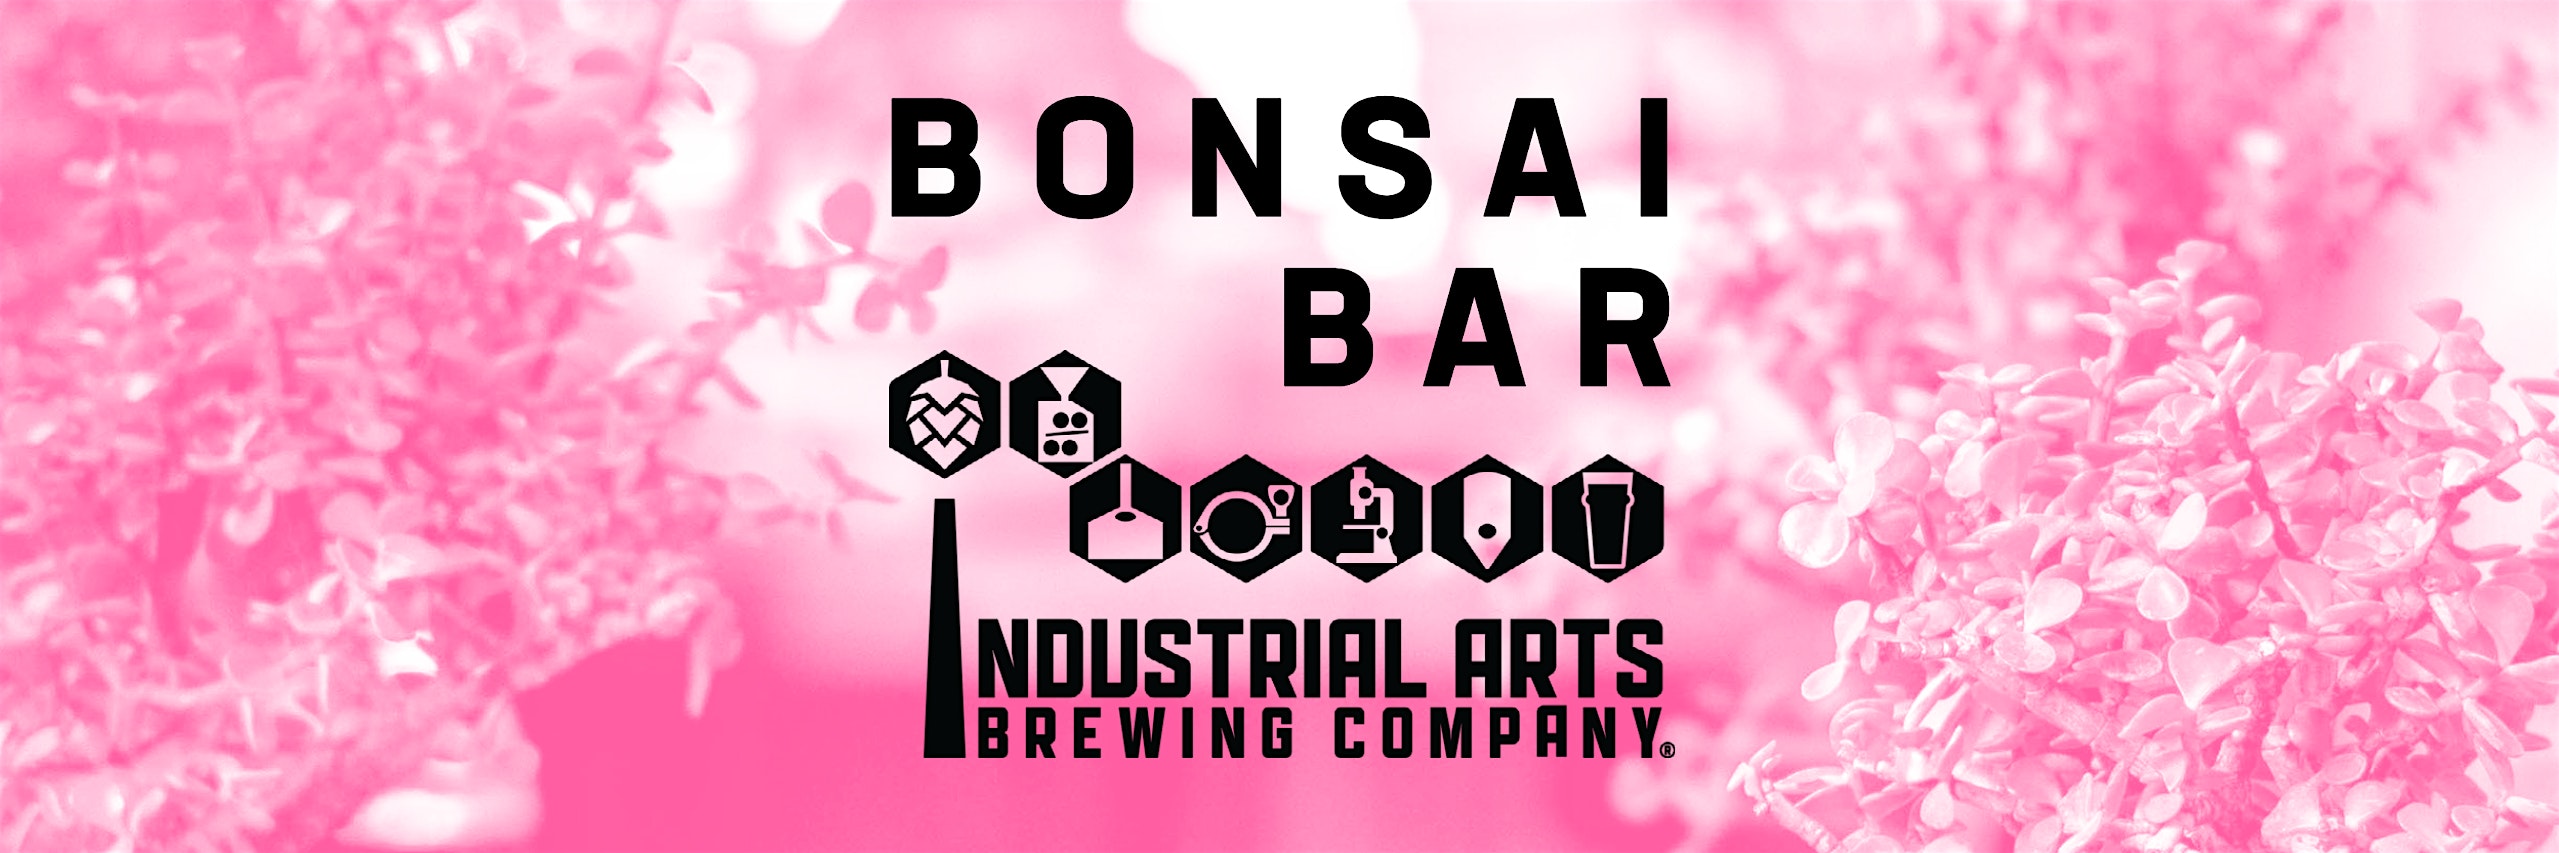 Bonsai Bar @ Industrial Arts Brewing Company – Beacon